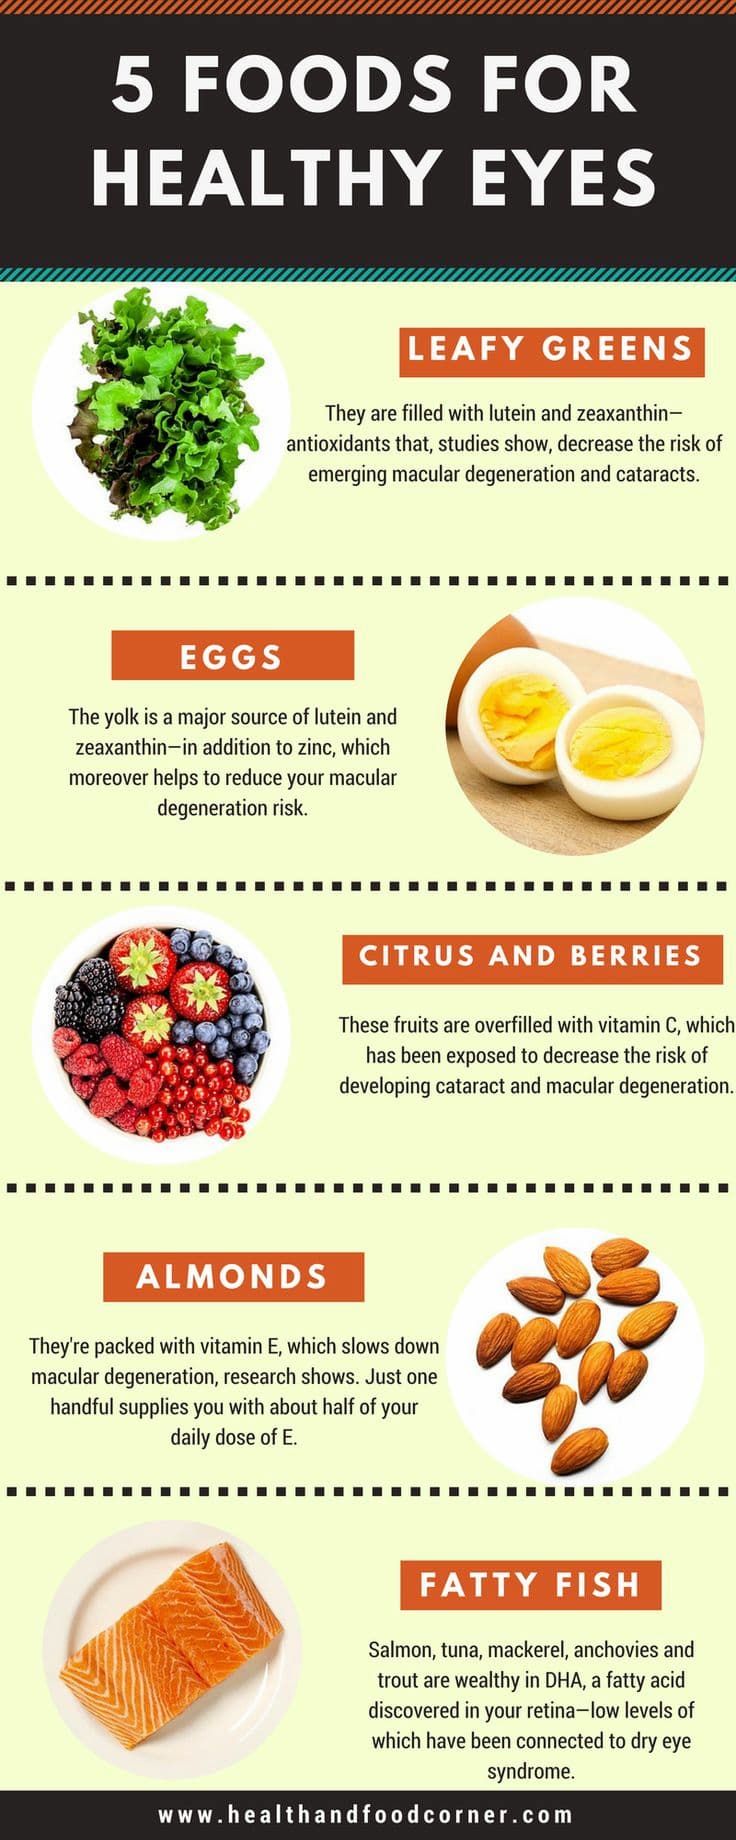 Top foods that help maintain healthy eyesight